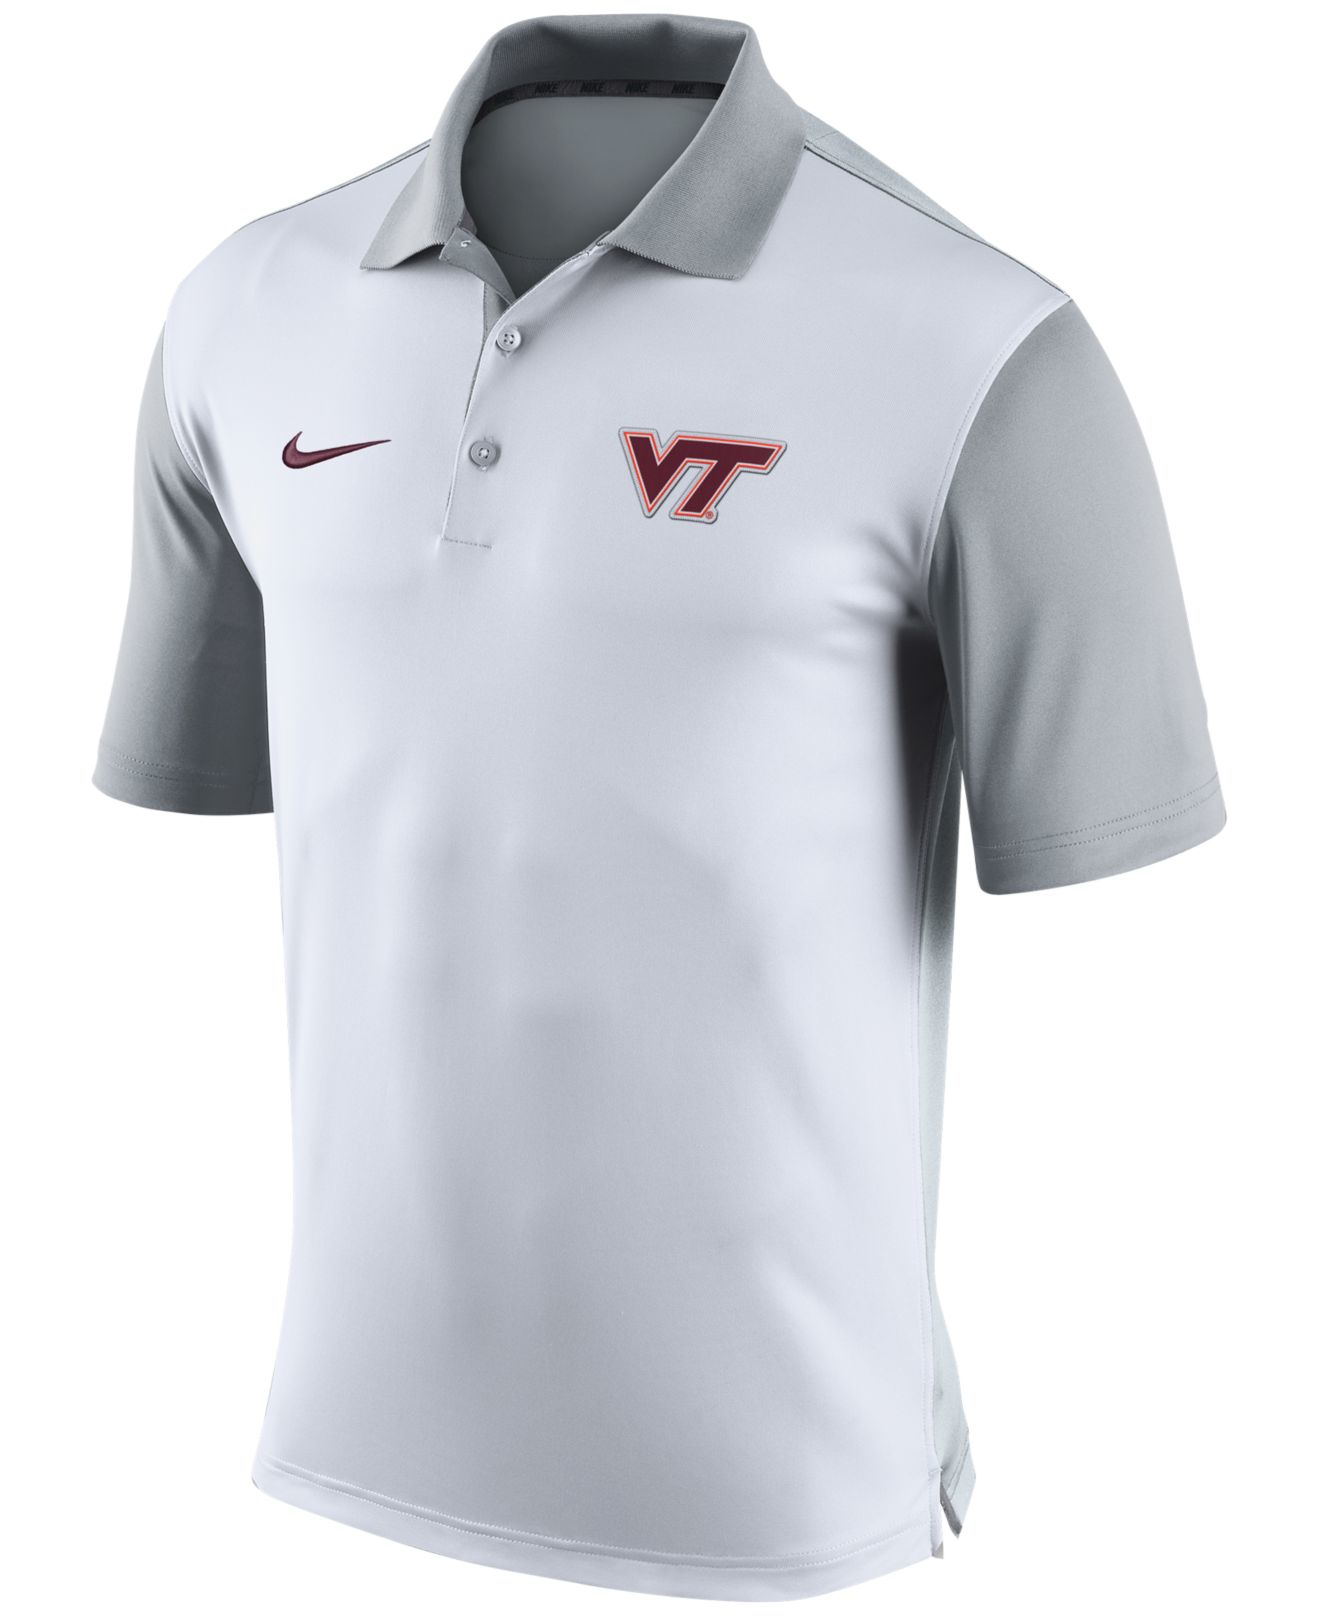 Lyst - Nike Men's Virginia Tech Hokies Preseason Polo in White for Men